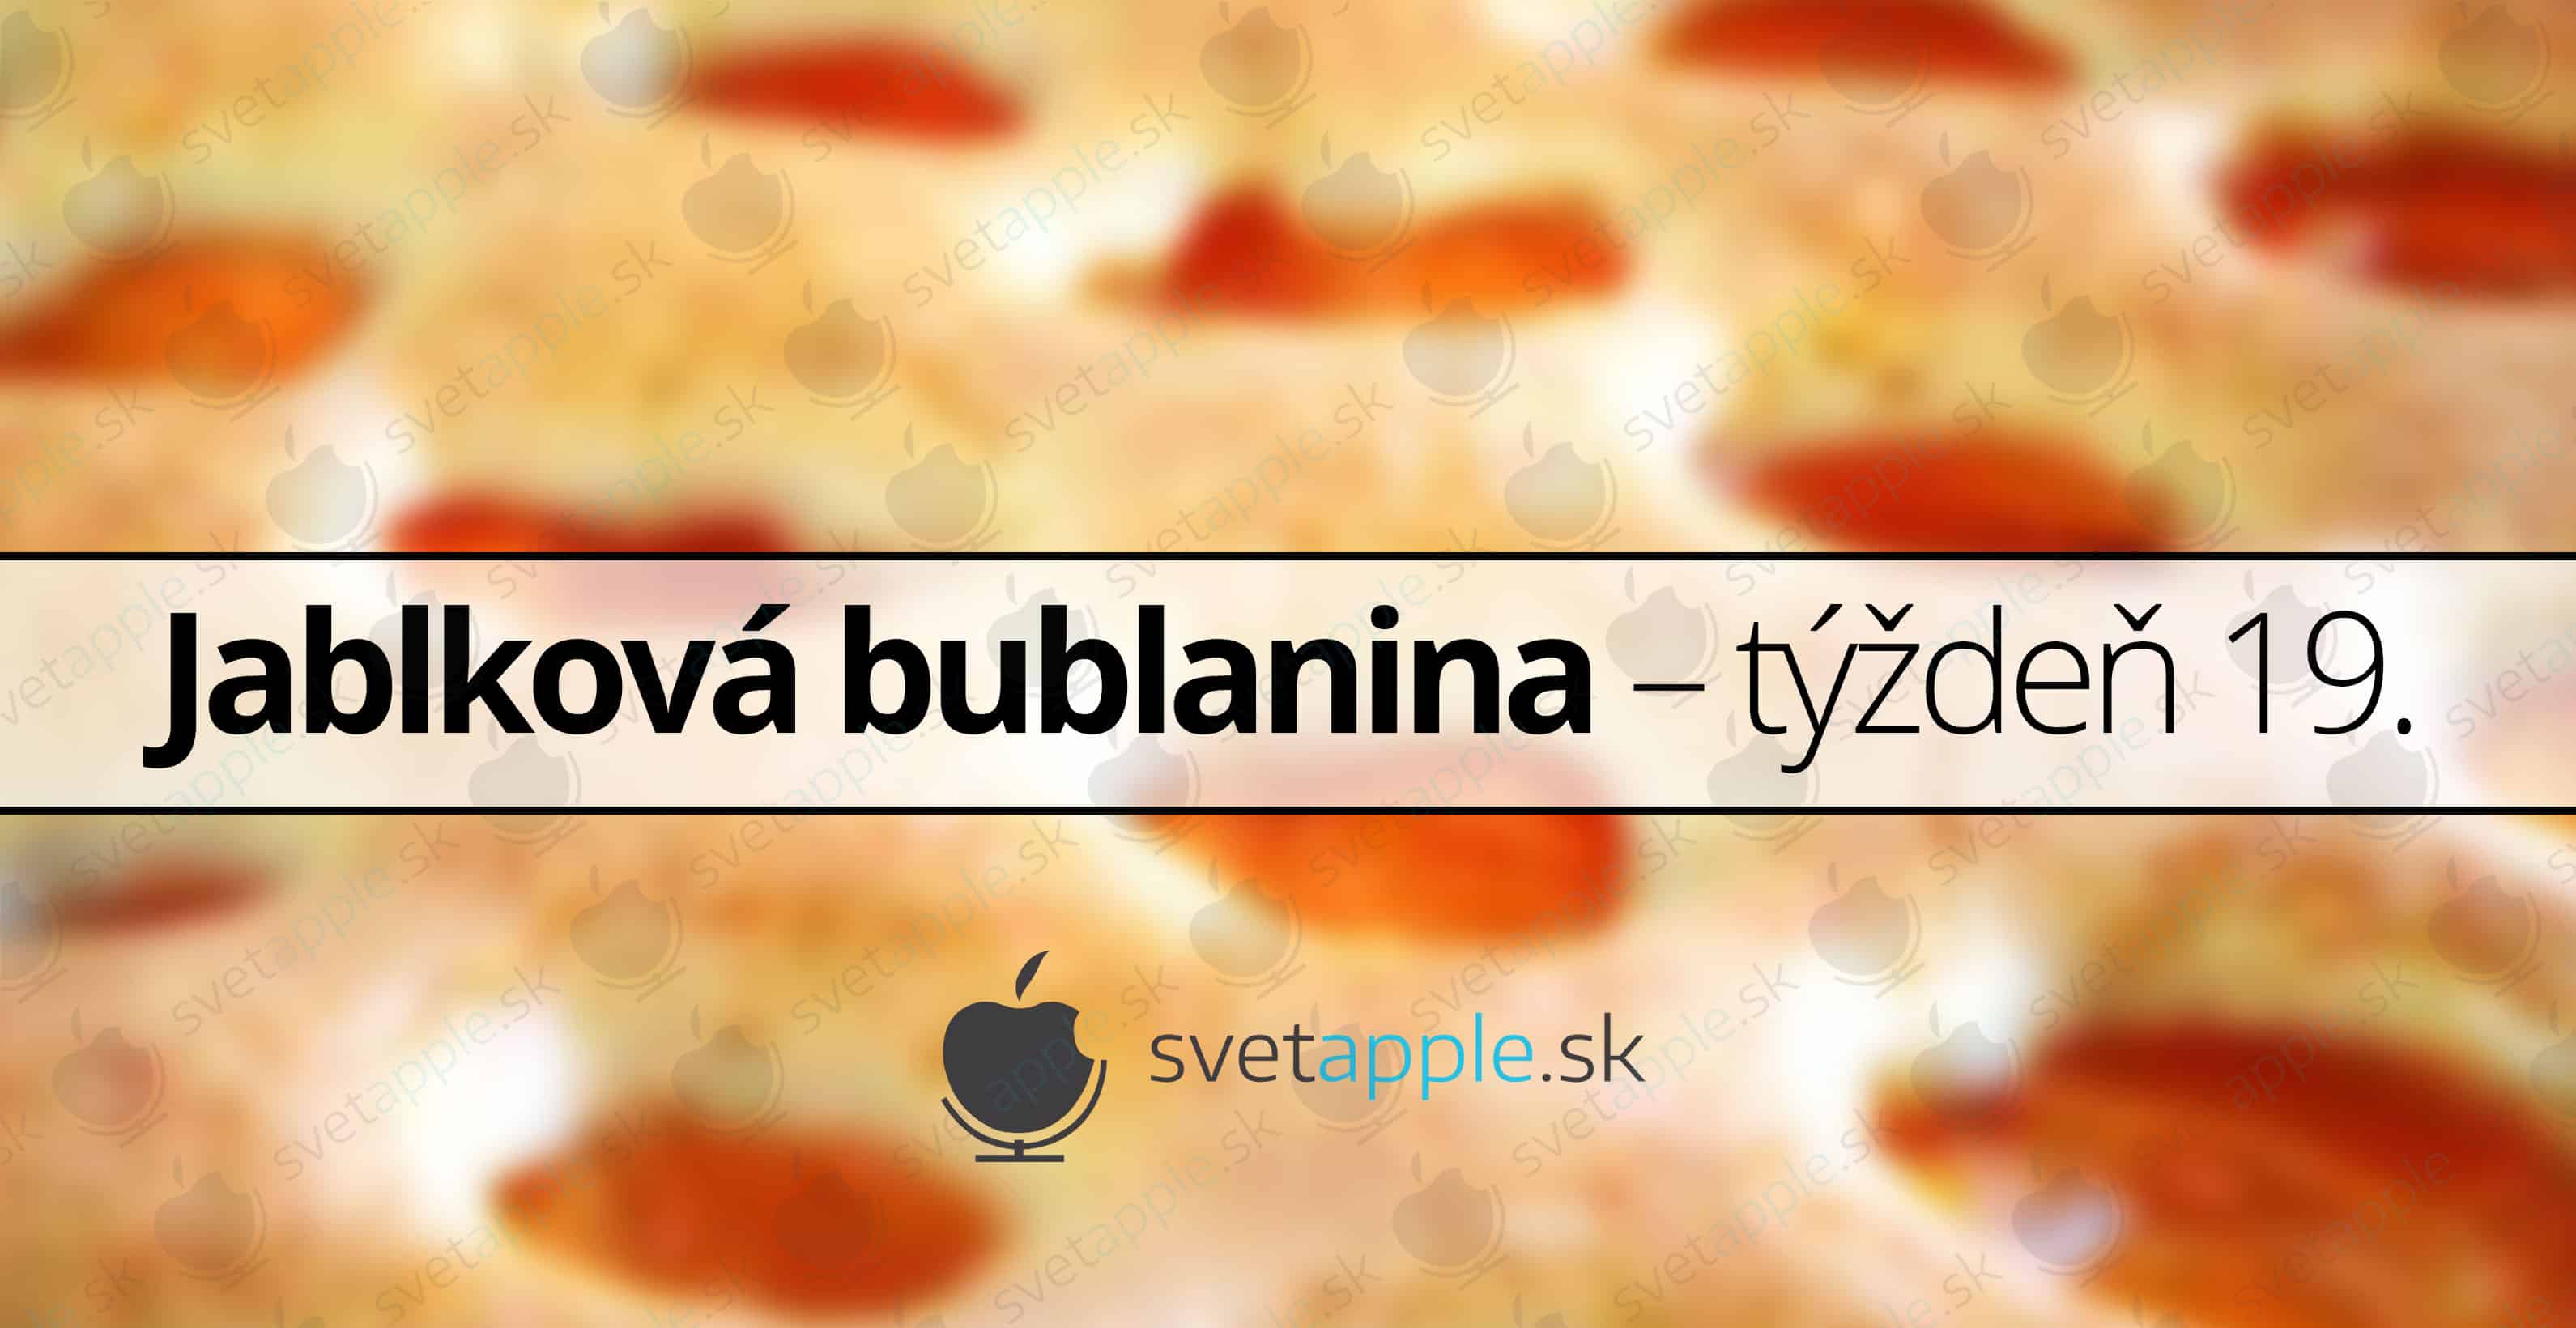 Jablkova-bublanina-19--SvetApple